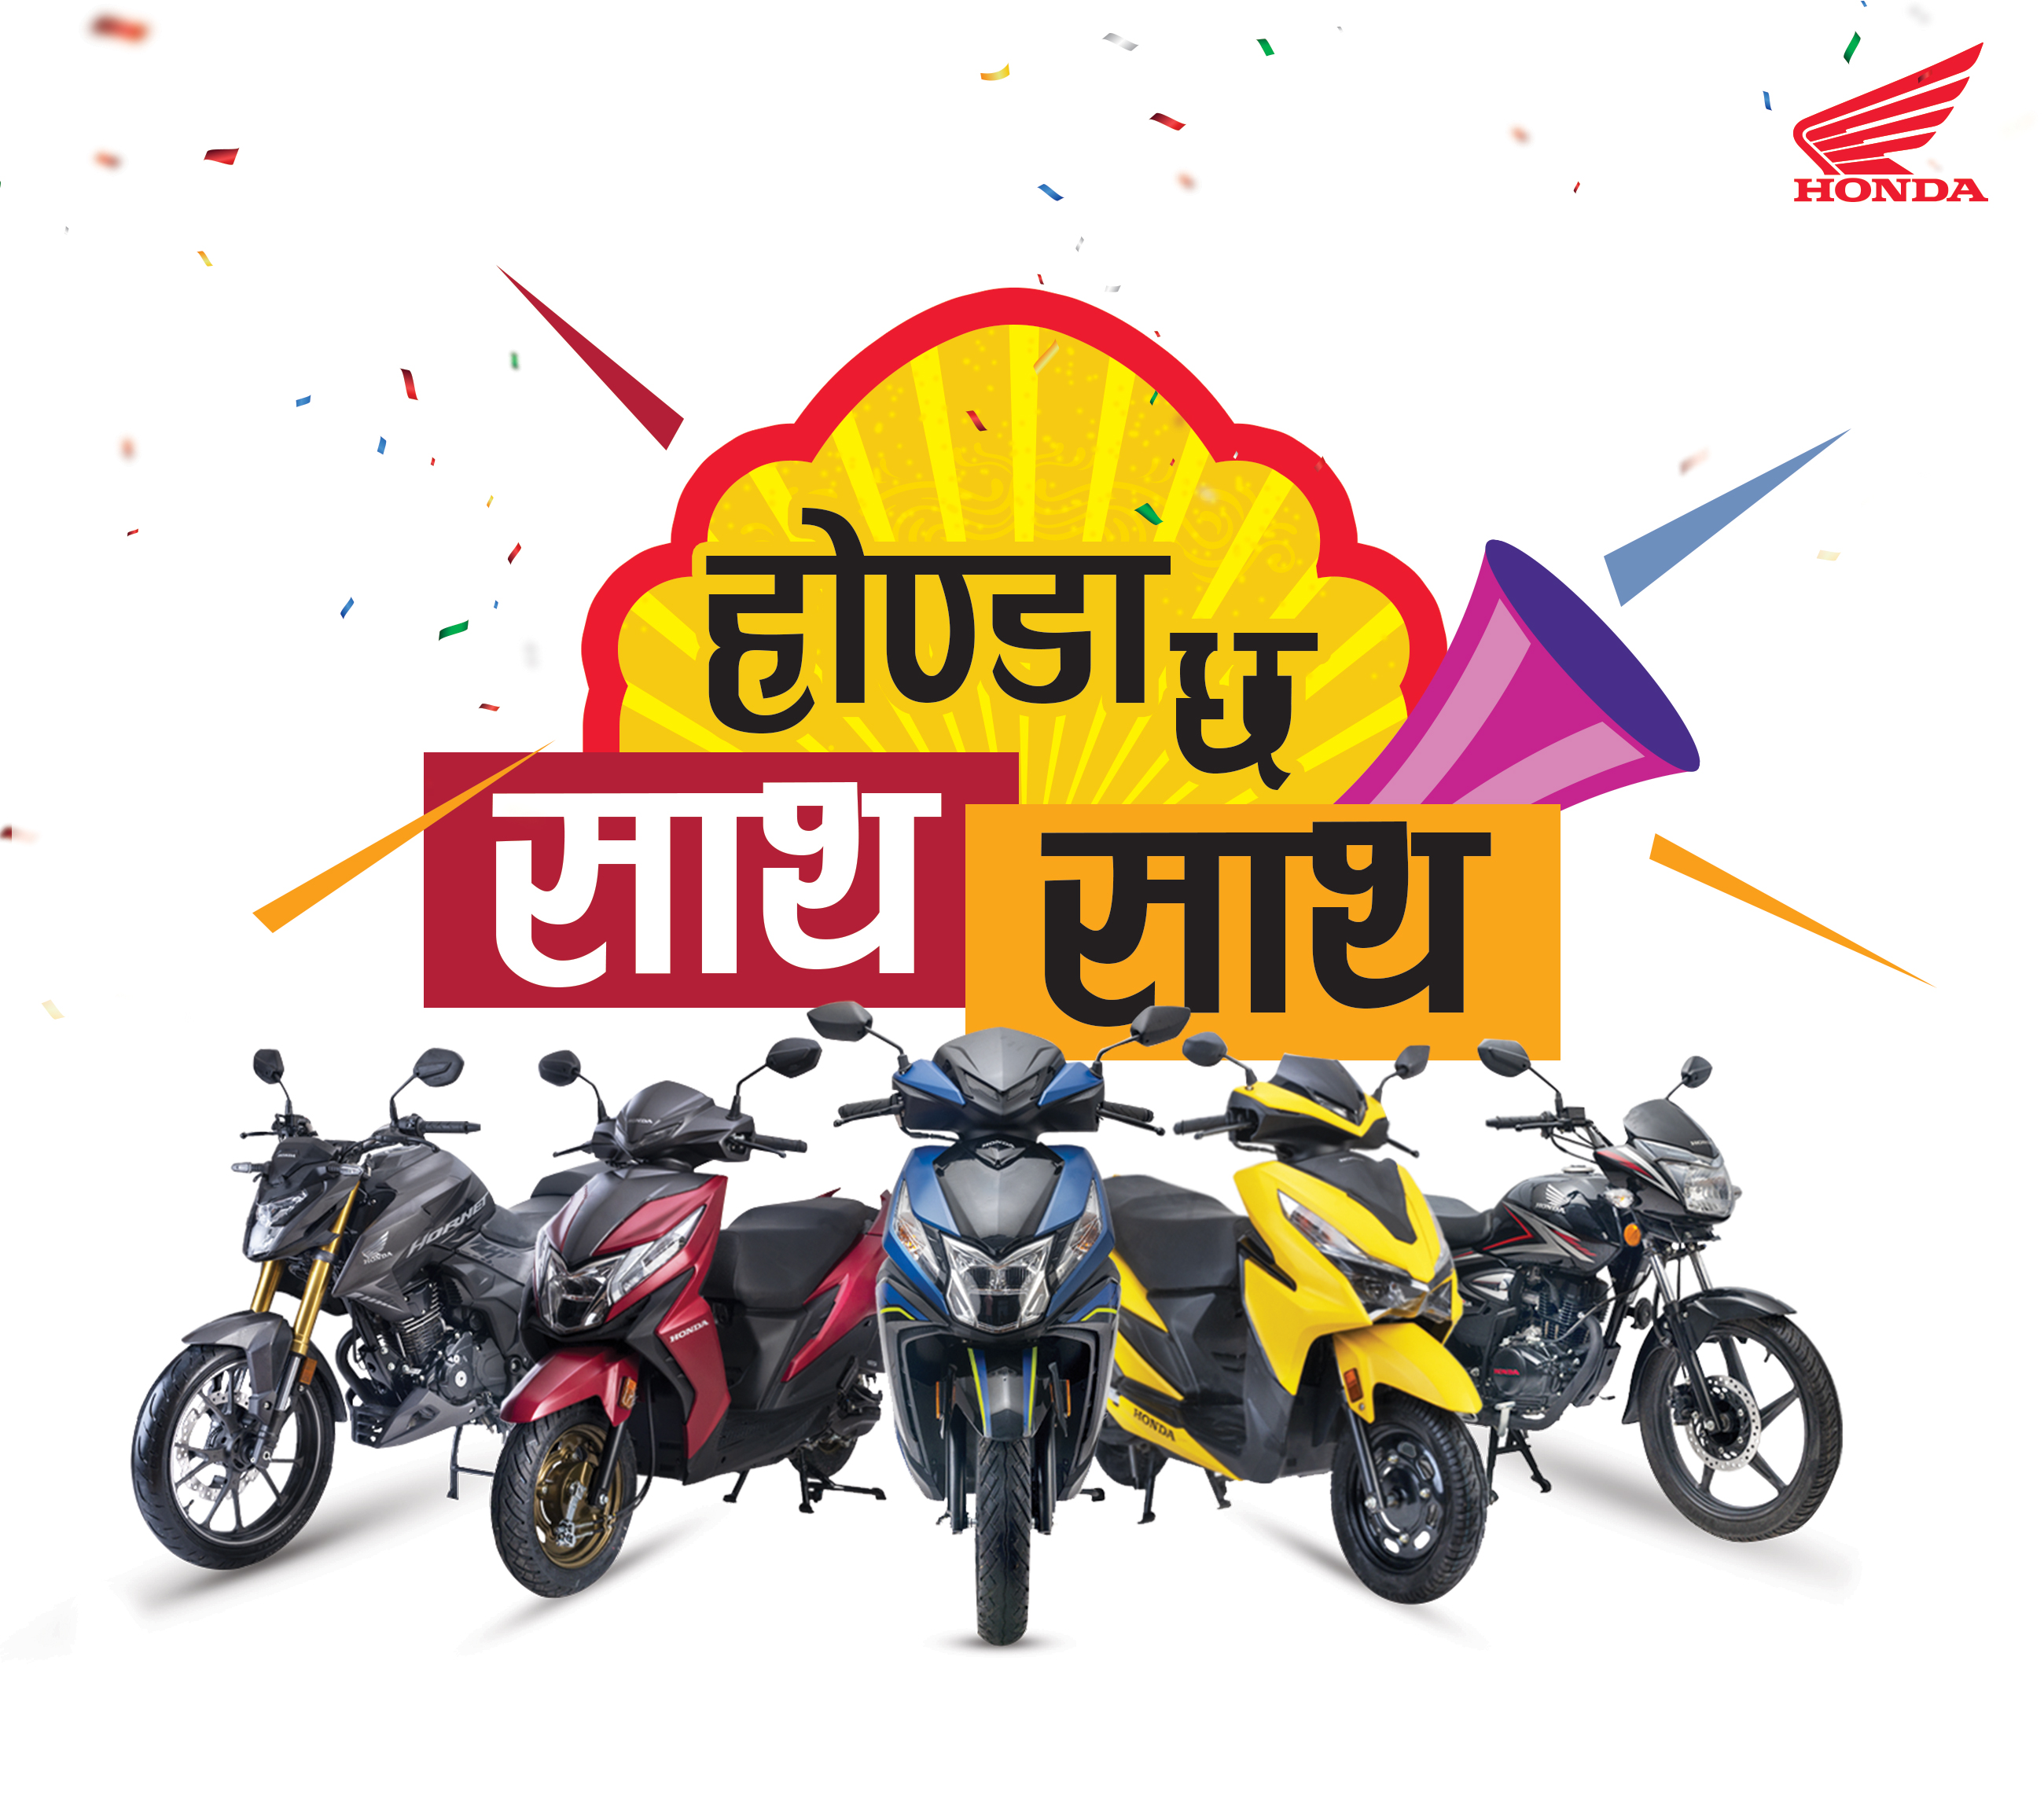 Honda announces ‘Honda Chha Sath Sath’ scheme